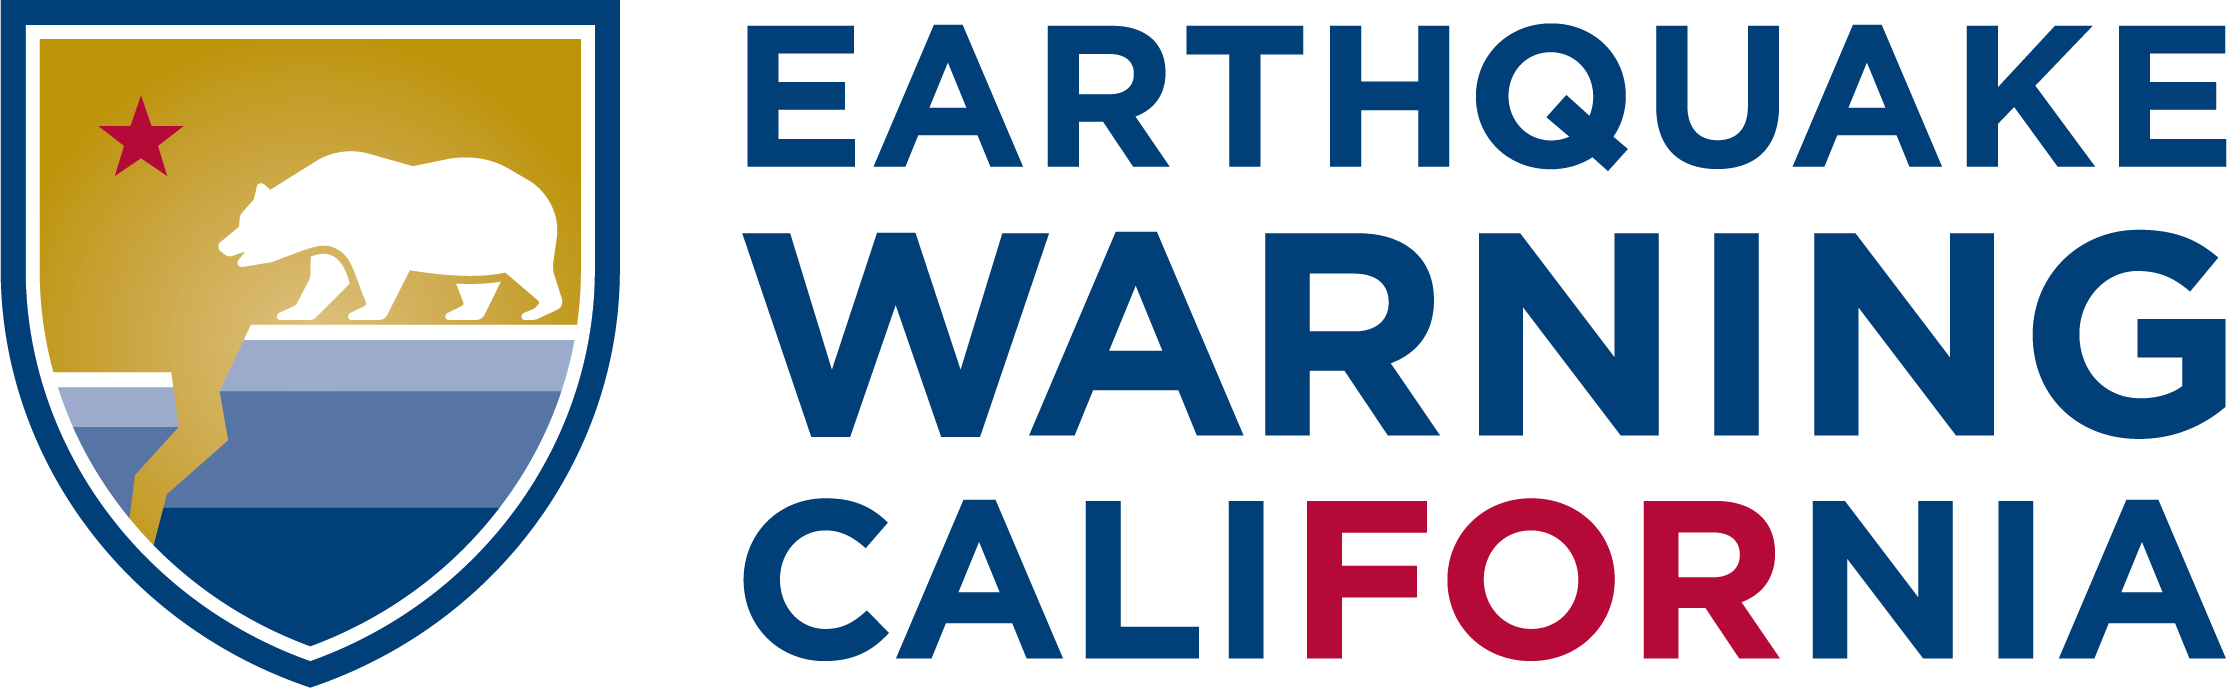 Earthquake warning for california logo.